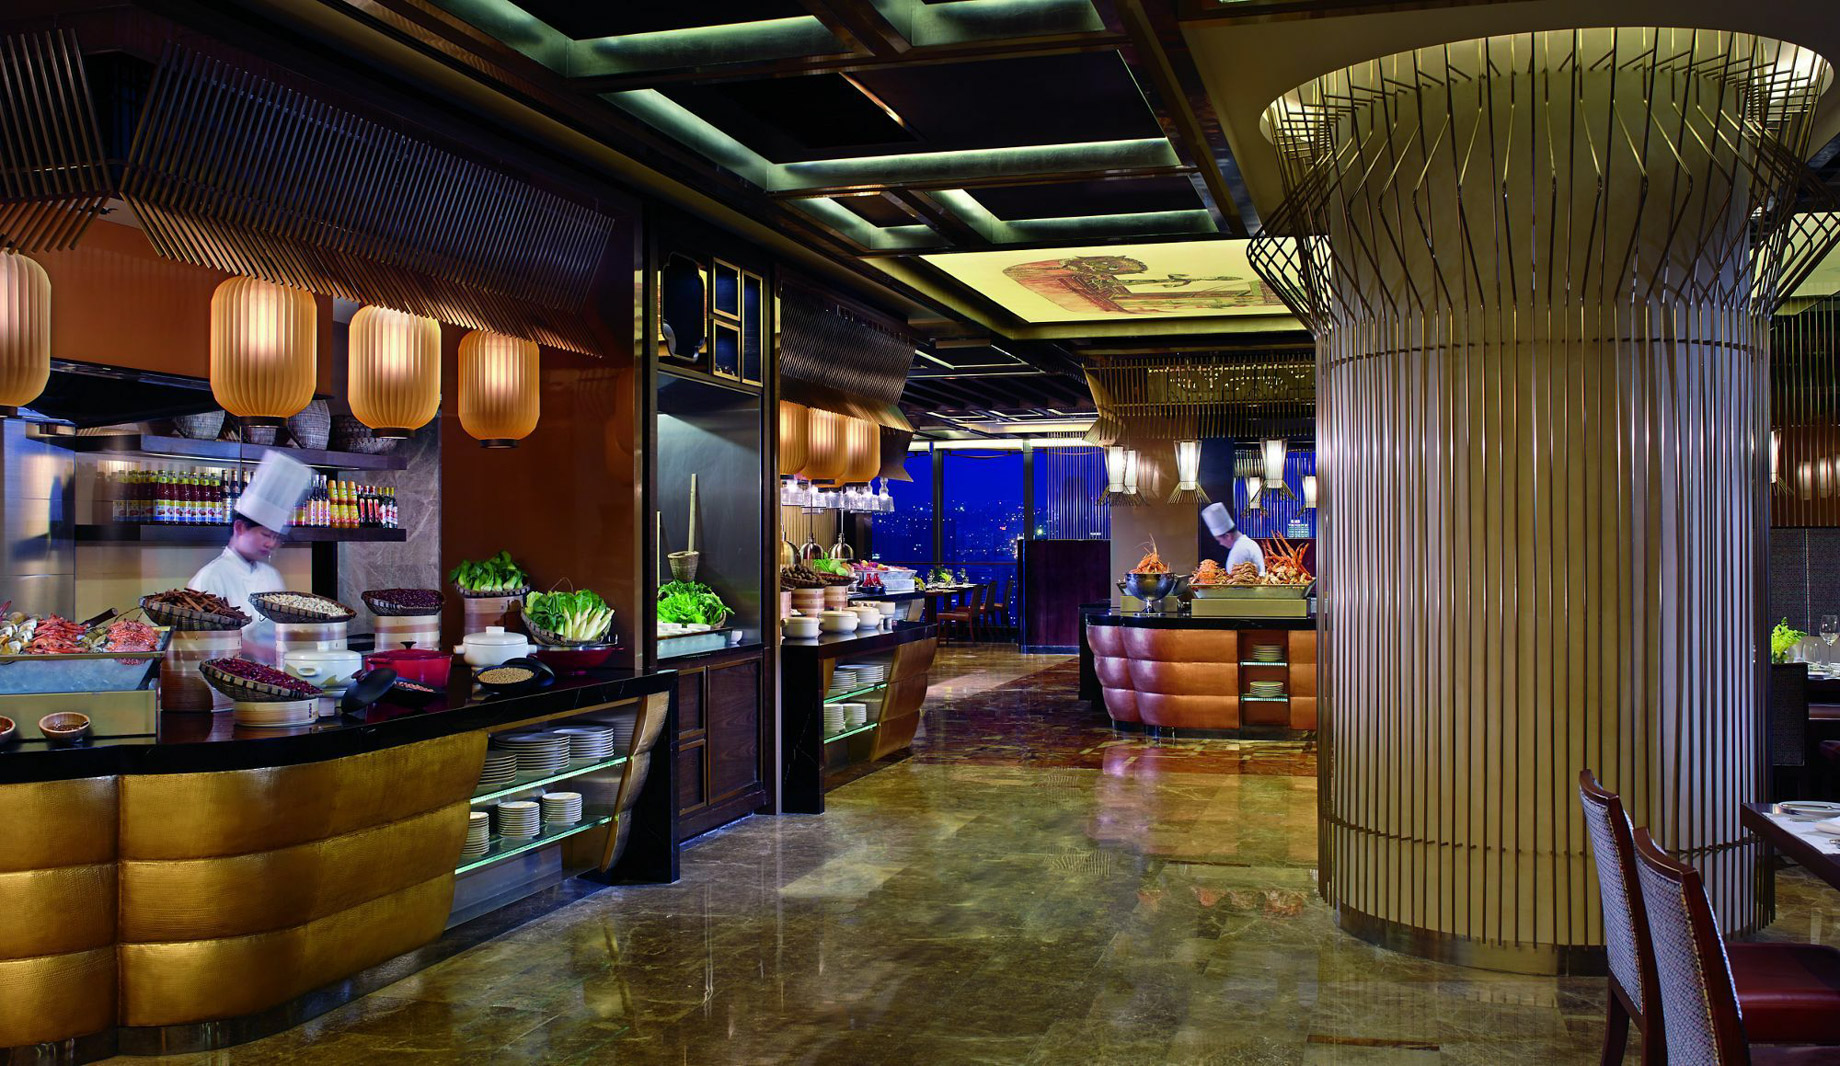 The Ritz-Carlton, Chengdu Hotel - Chengdu, Sichuan, China - Spices Restaurant